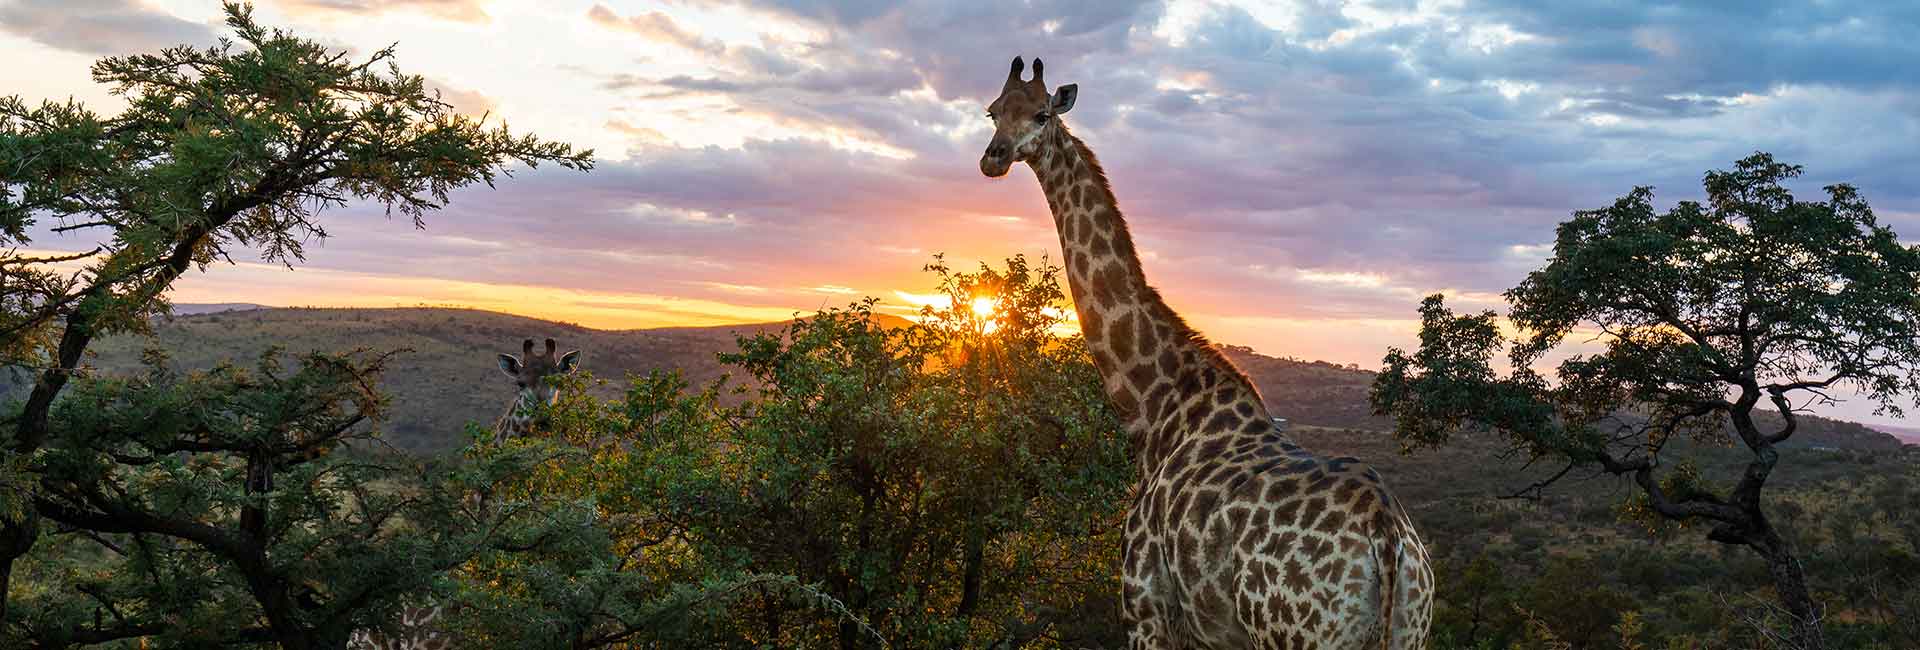 giraffe-hunting-somerby-safaris-banner